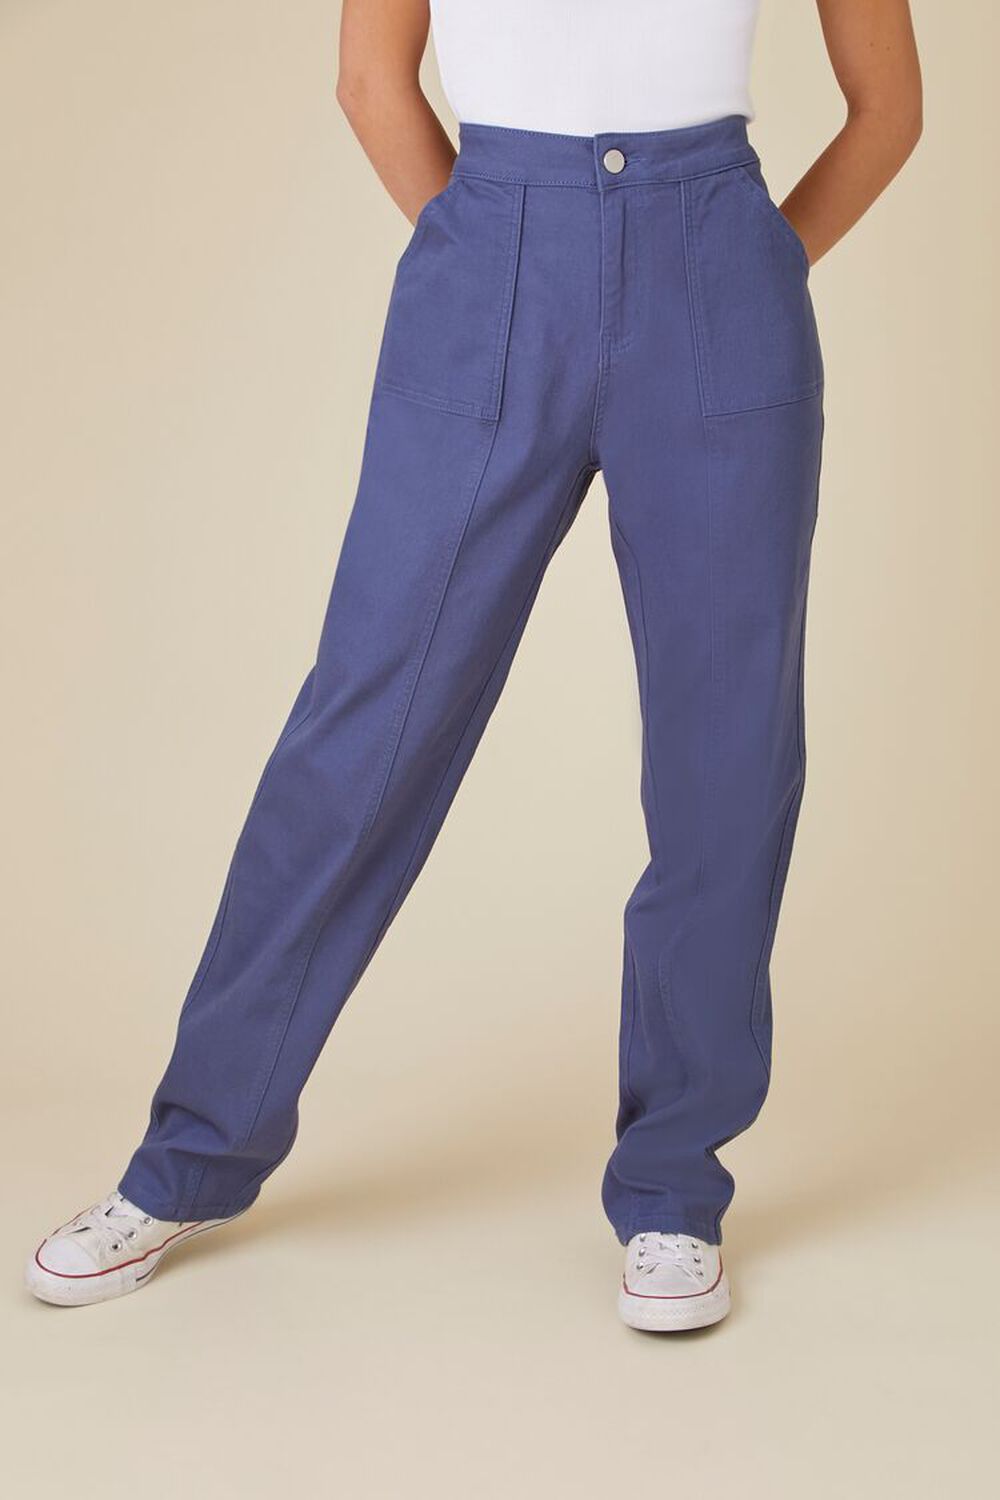 NAVY Straight-Leg Uniform Pants, image 2